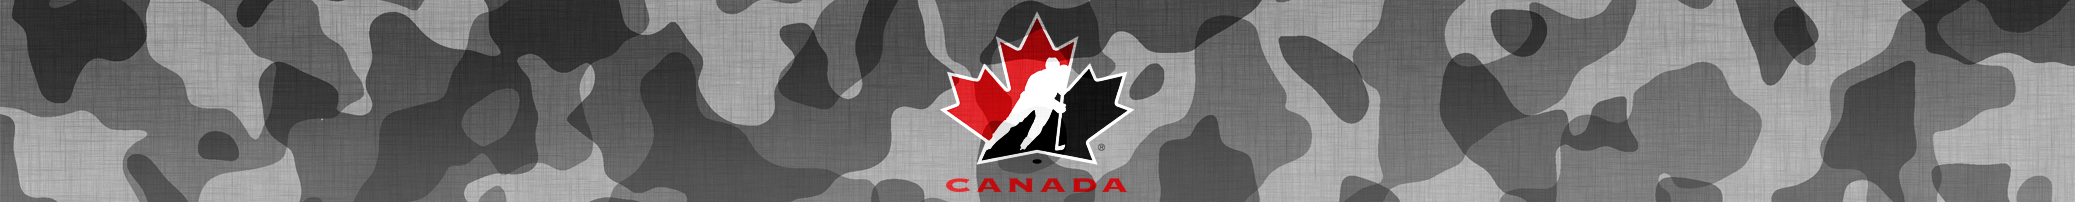 Team Canada Collection